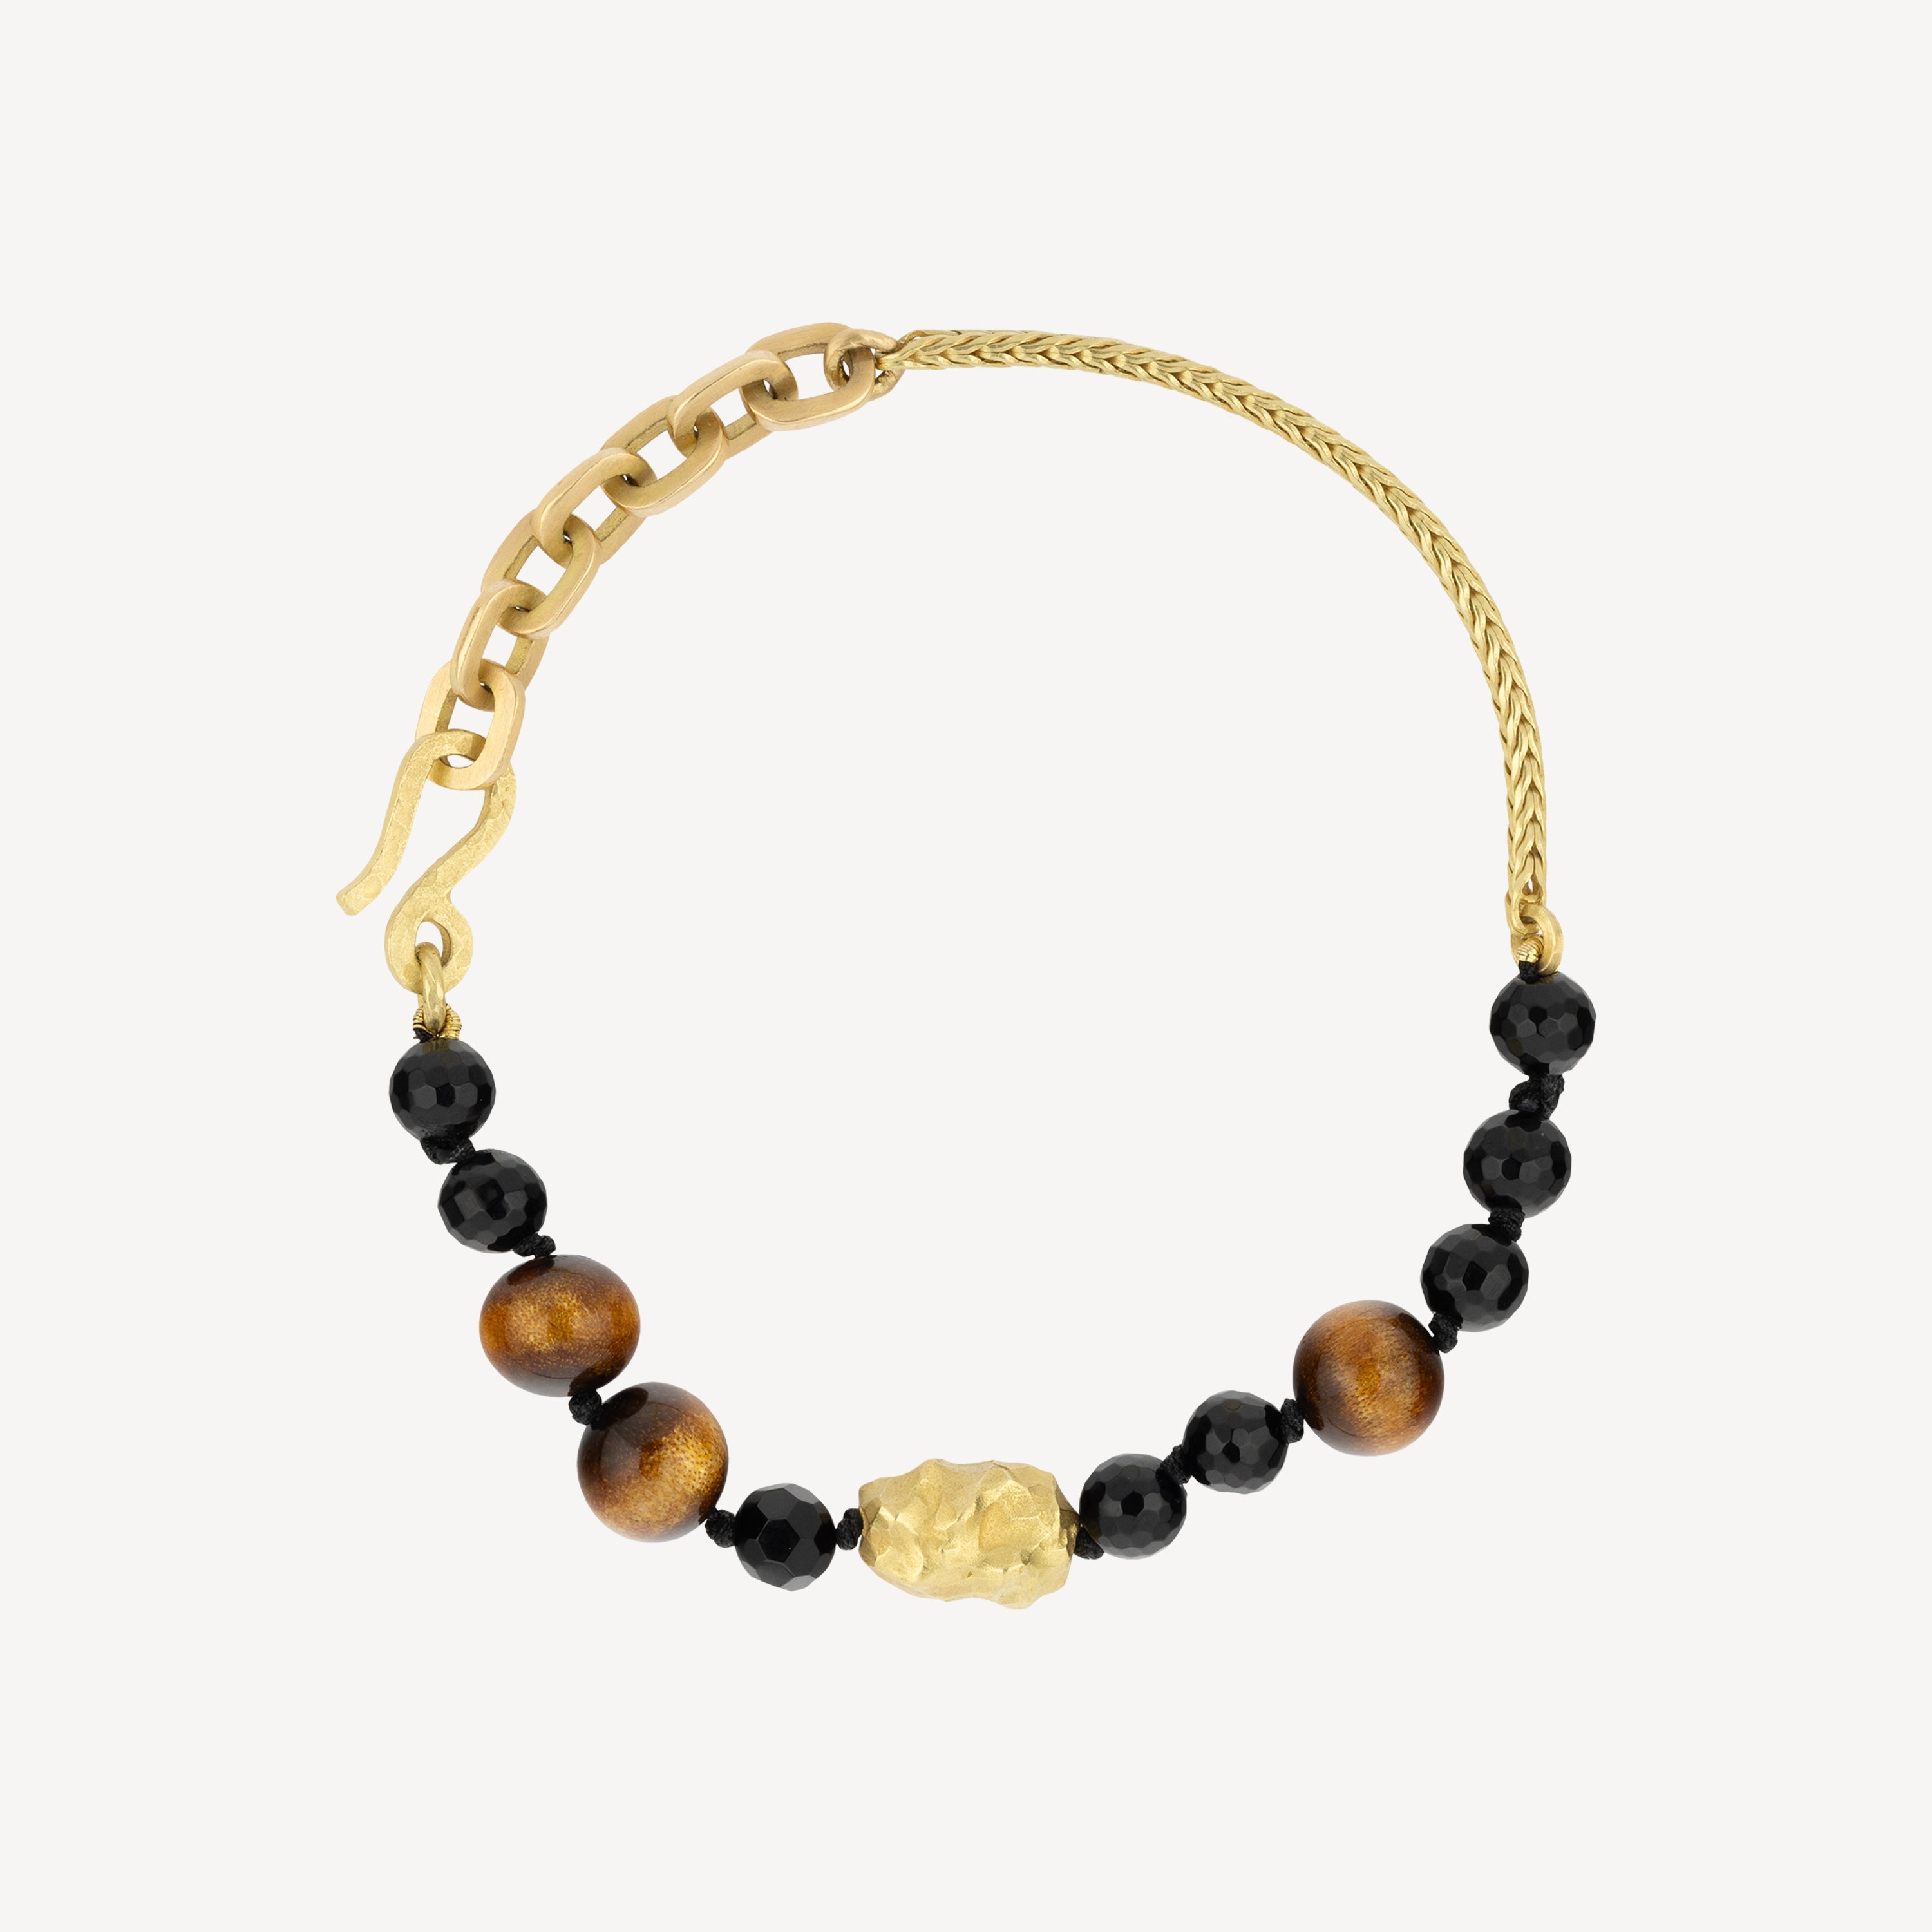 Buy Sadguru Traders Women's Brass Designer Bracelet with High Gold Finish  [Bracelate 4] at Amazon.in